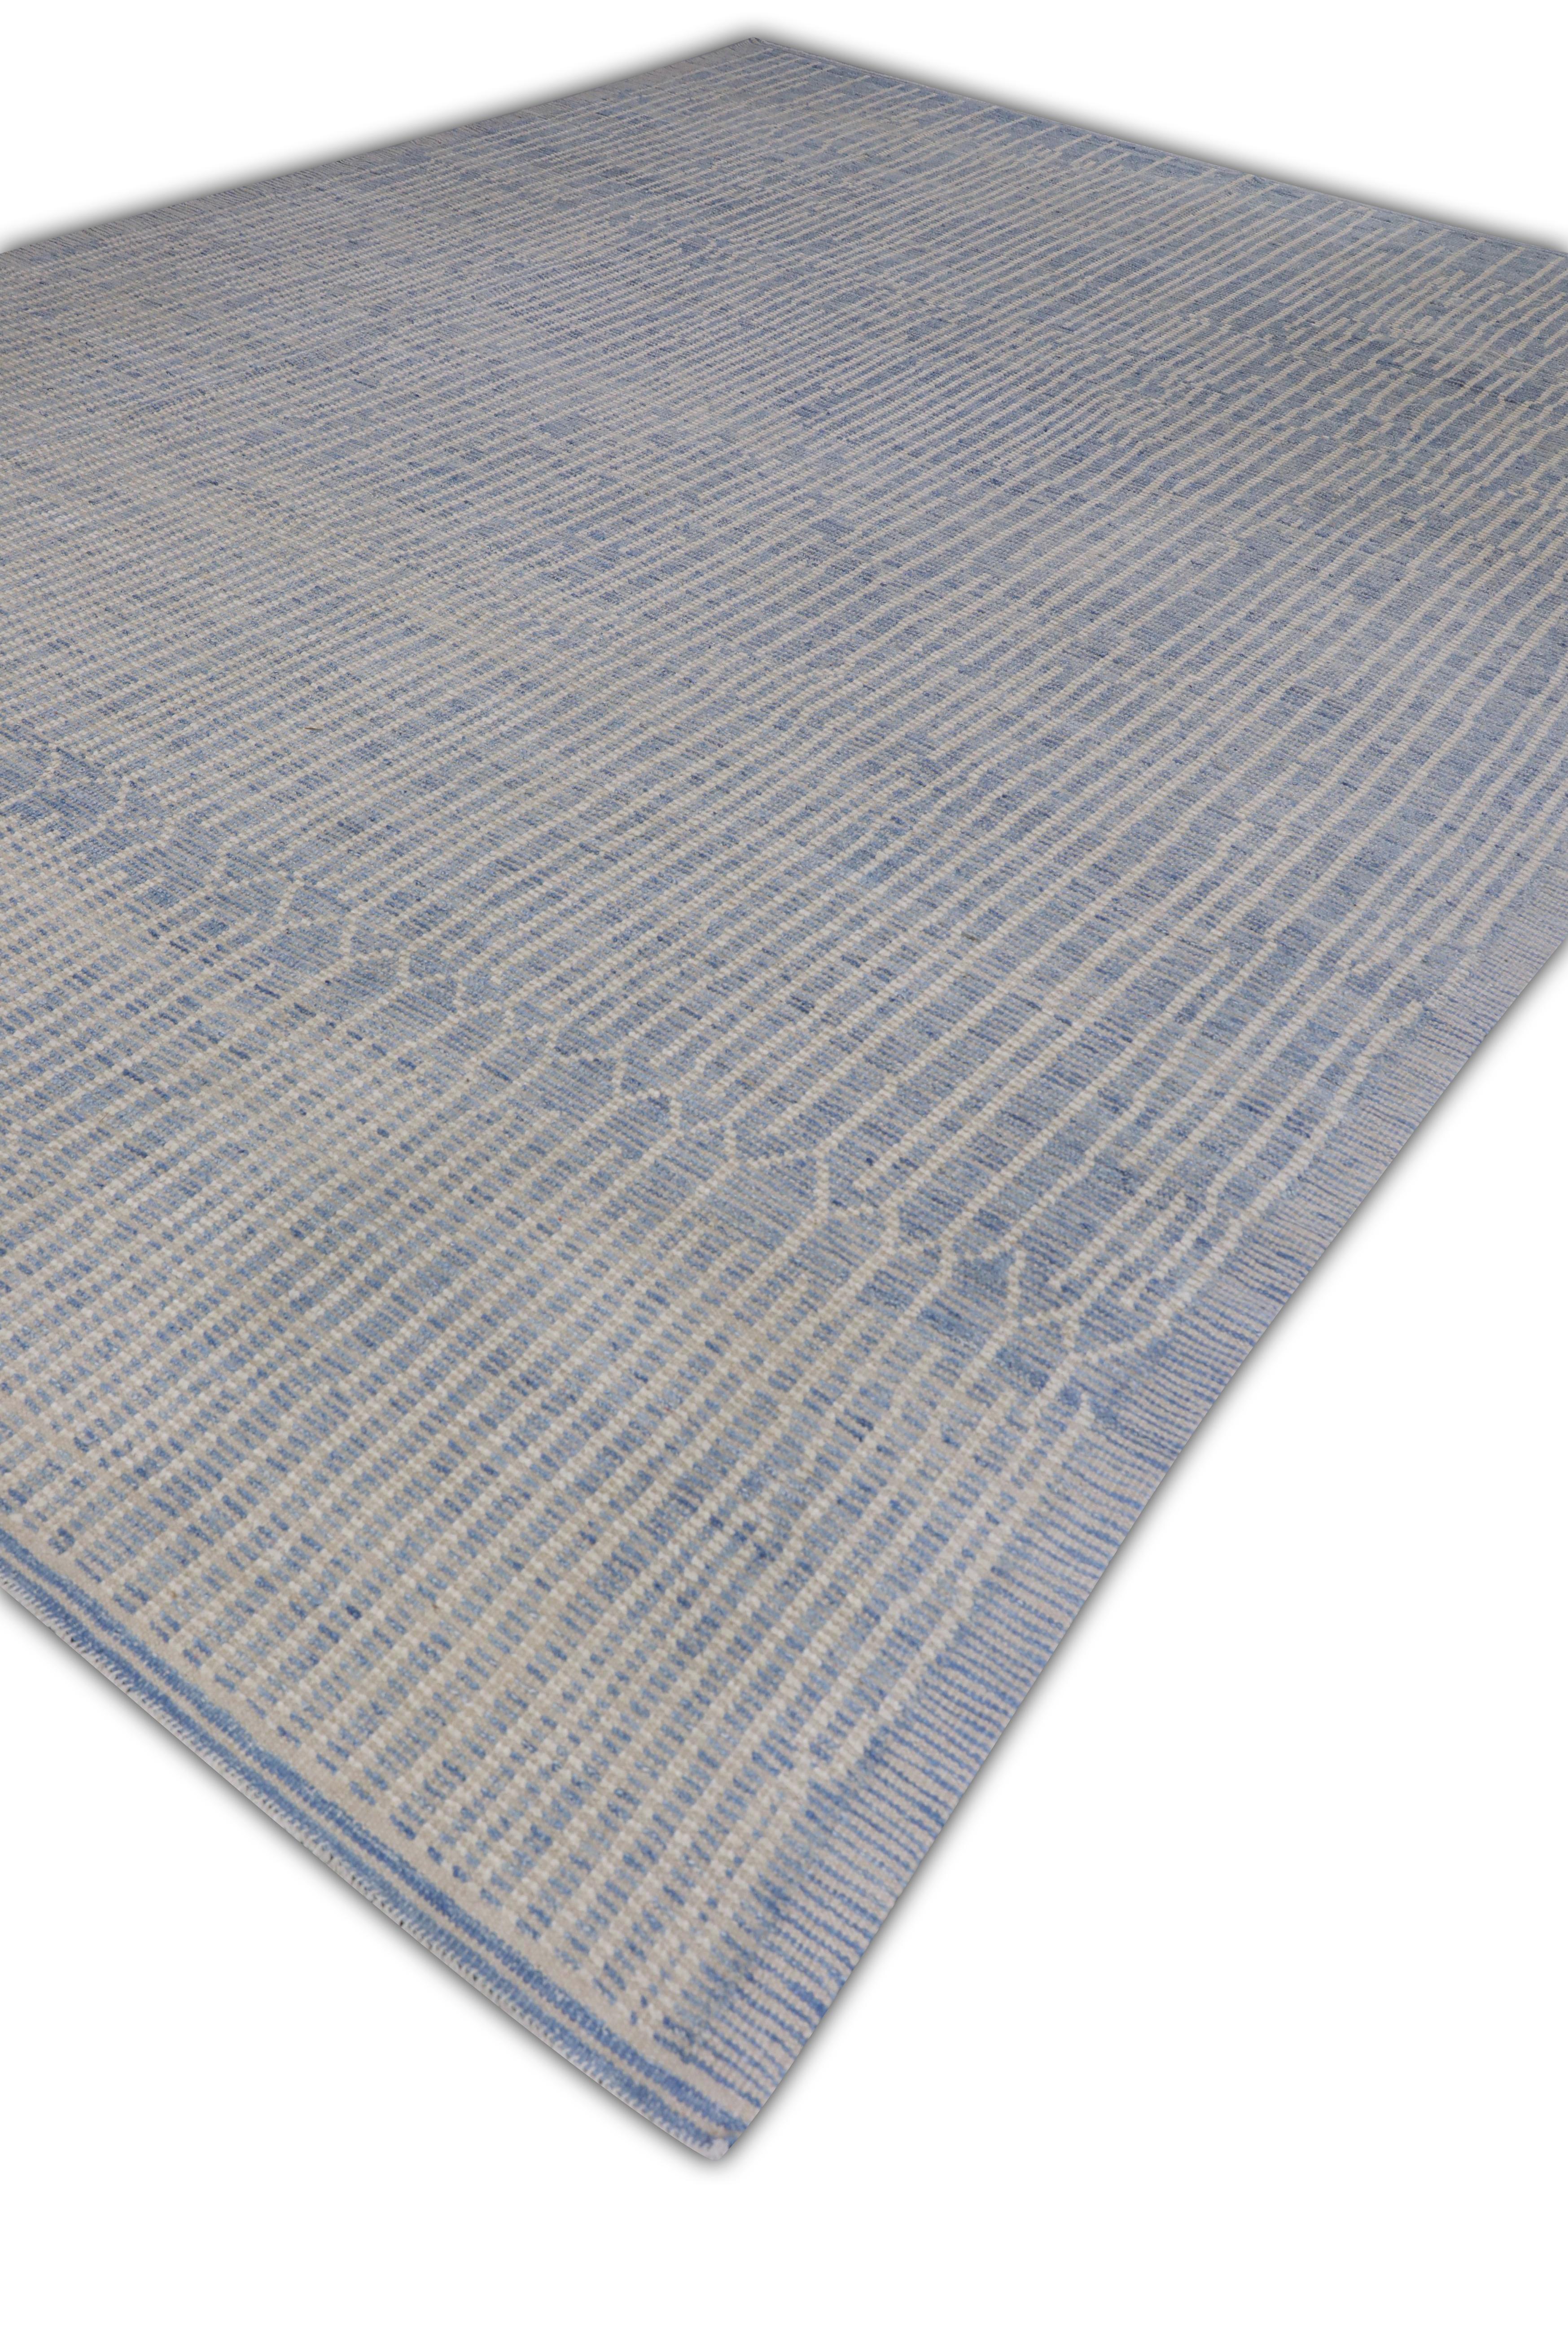 Modern  Handmade Wool Tulu Rug in Geometric Design 10' x 13'10